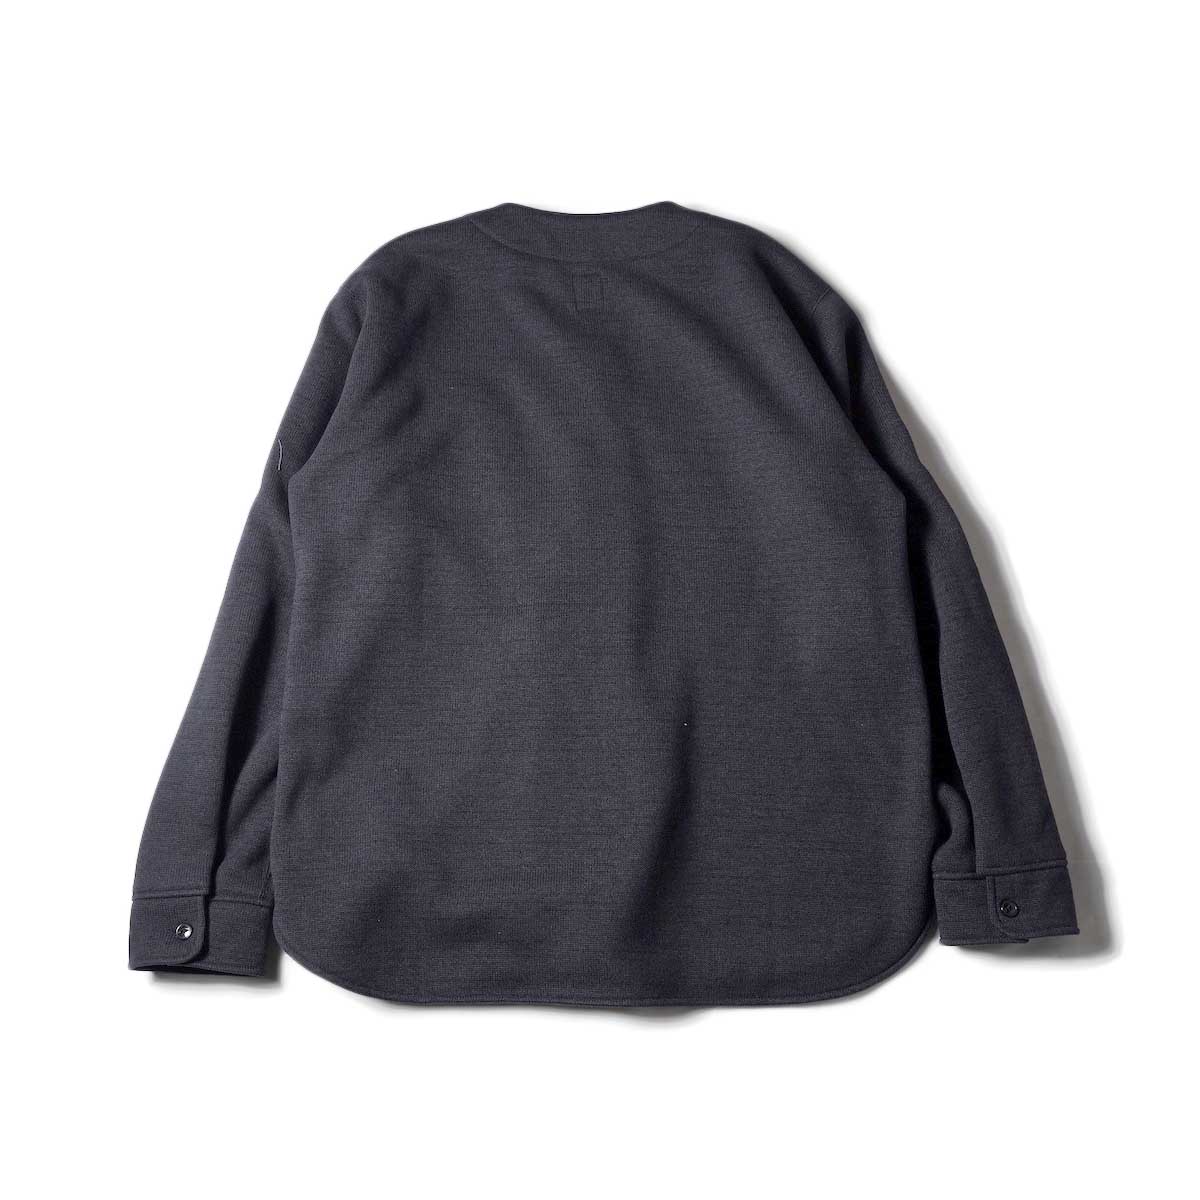 South2 West8 / Scouting Shirt - POLARTEC Fleece Lined Jersey (Black)背面